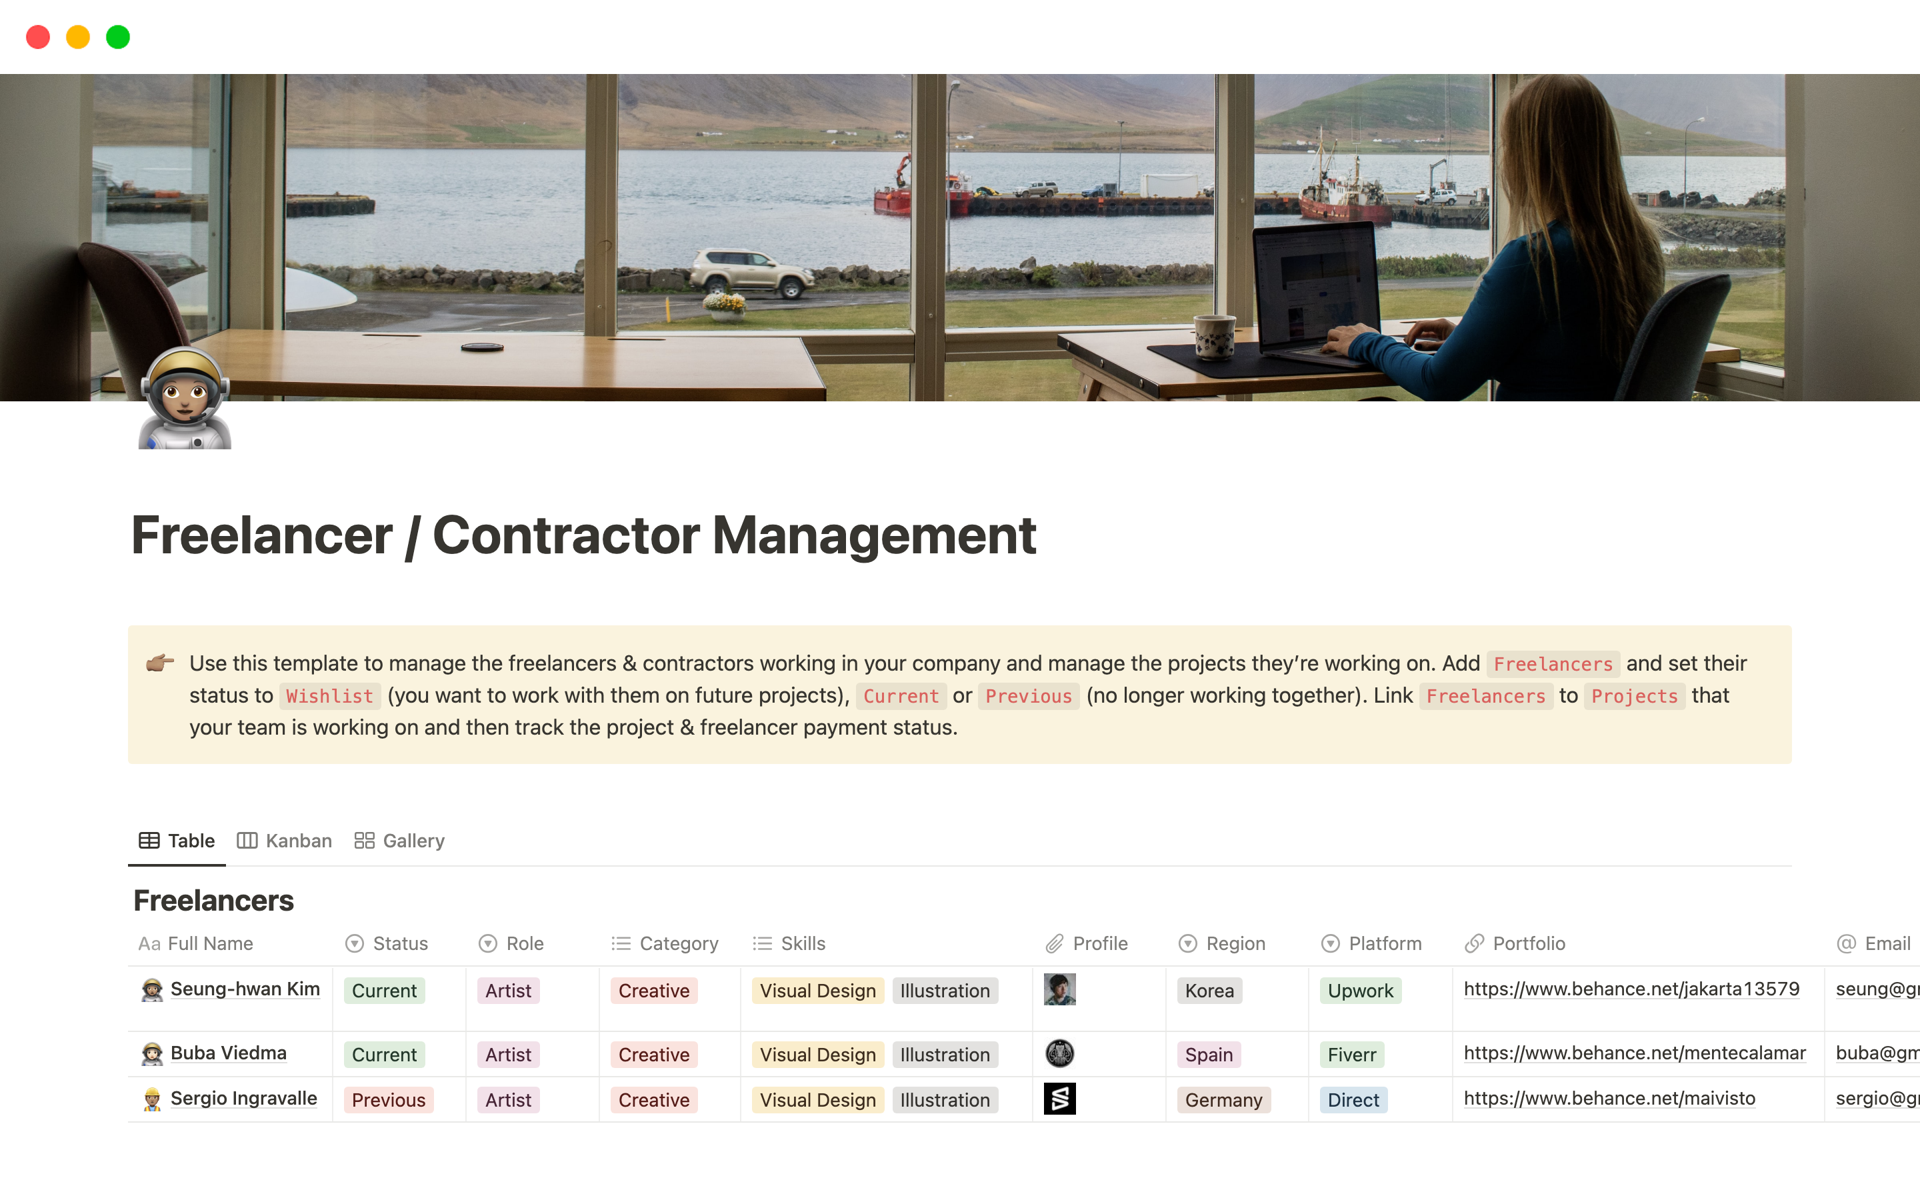 Vista previa de una plantilla para Freelancer / Contractor Management